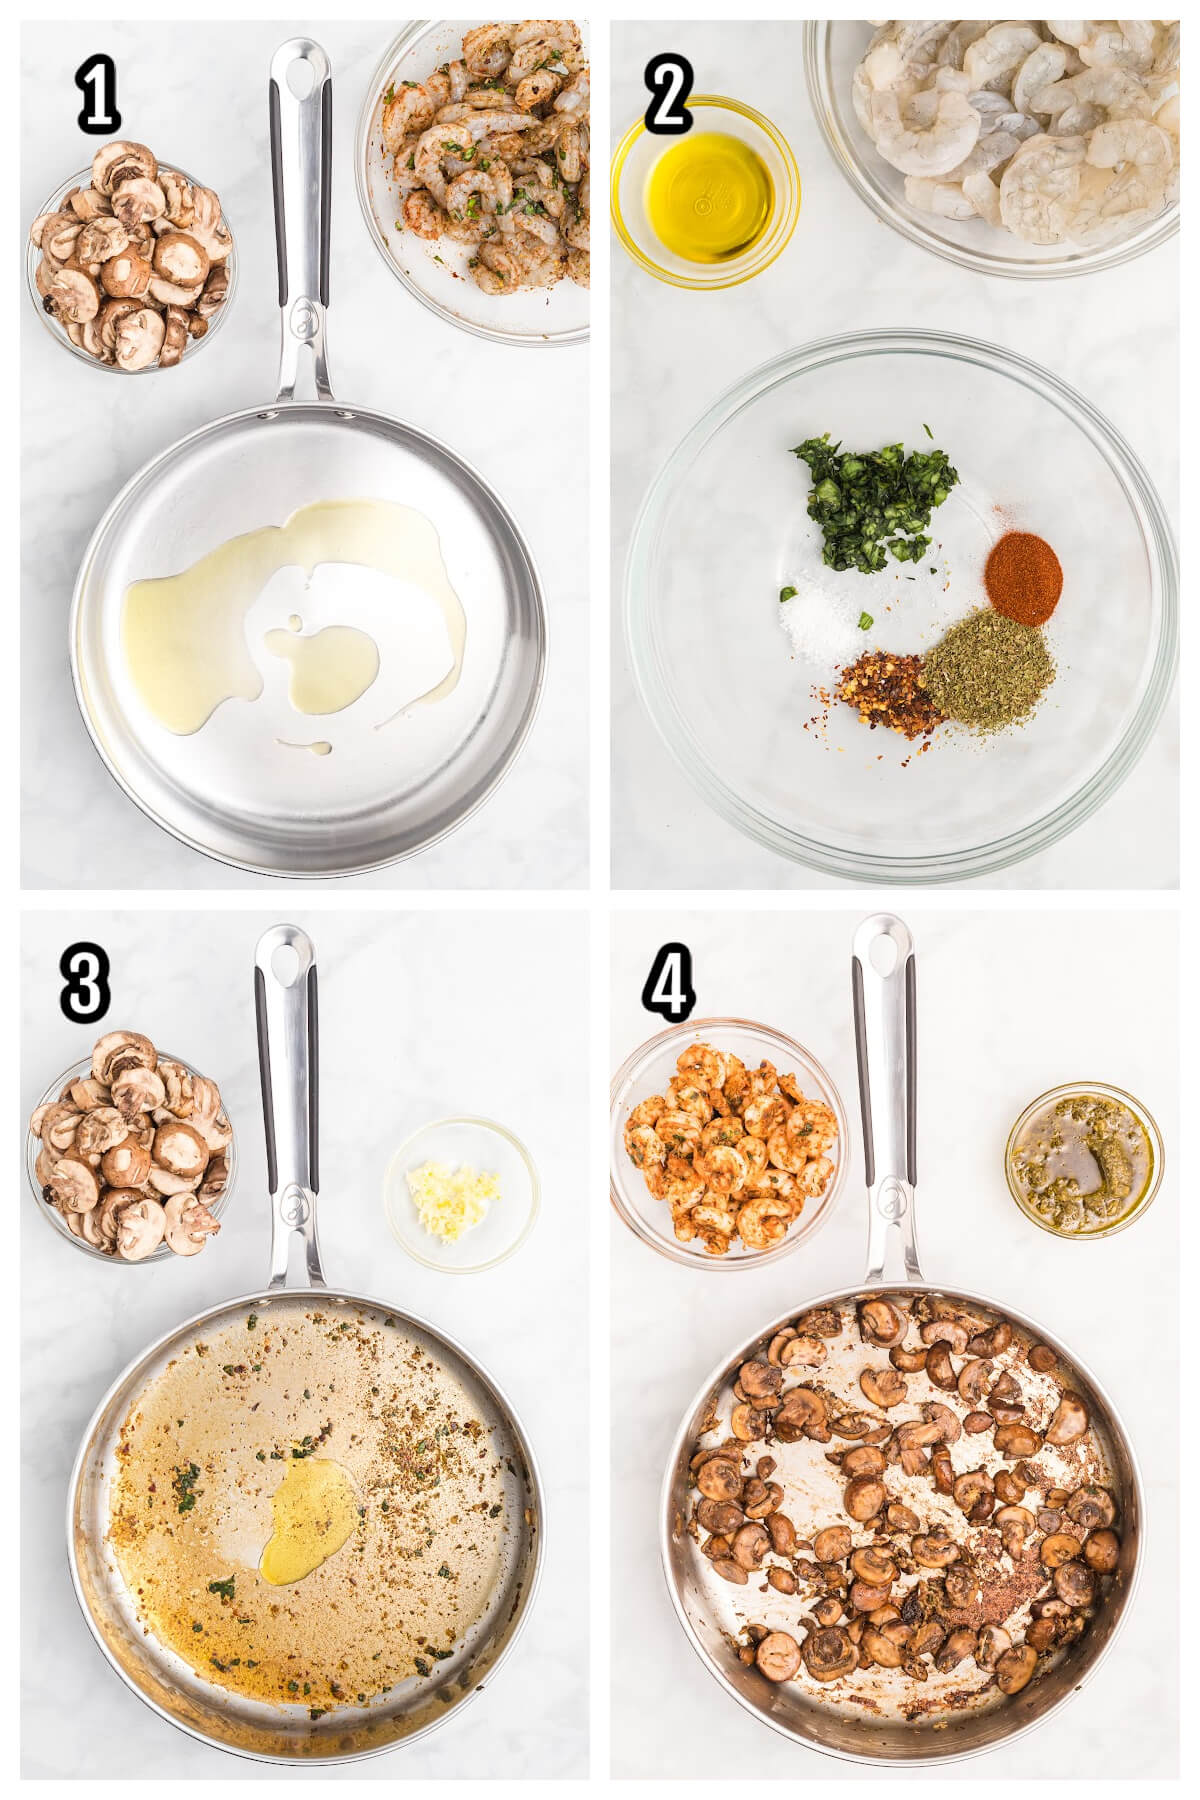 First four steps to making the Pesto shrimp fettuccine. 